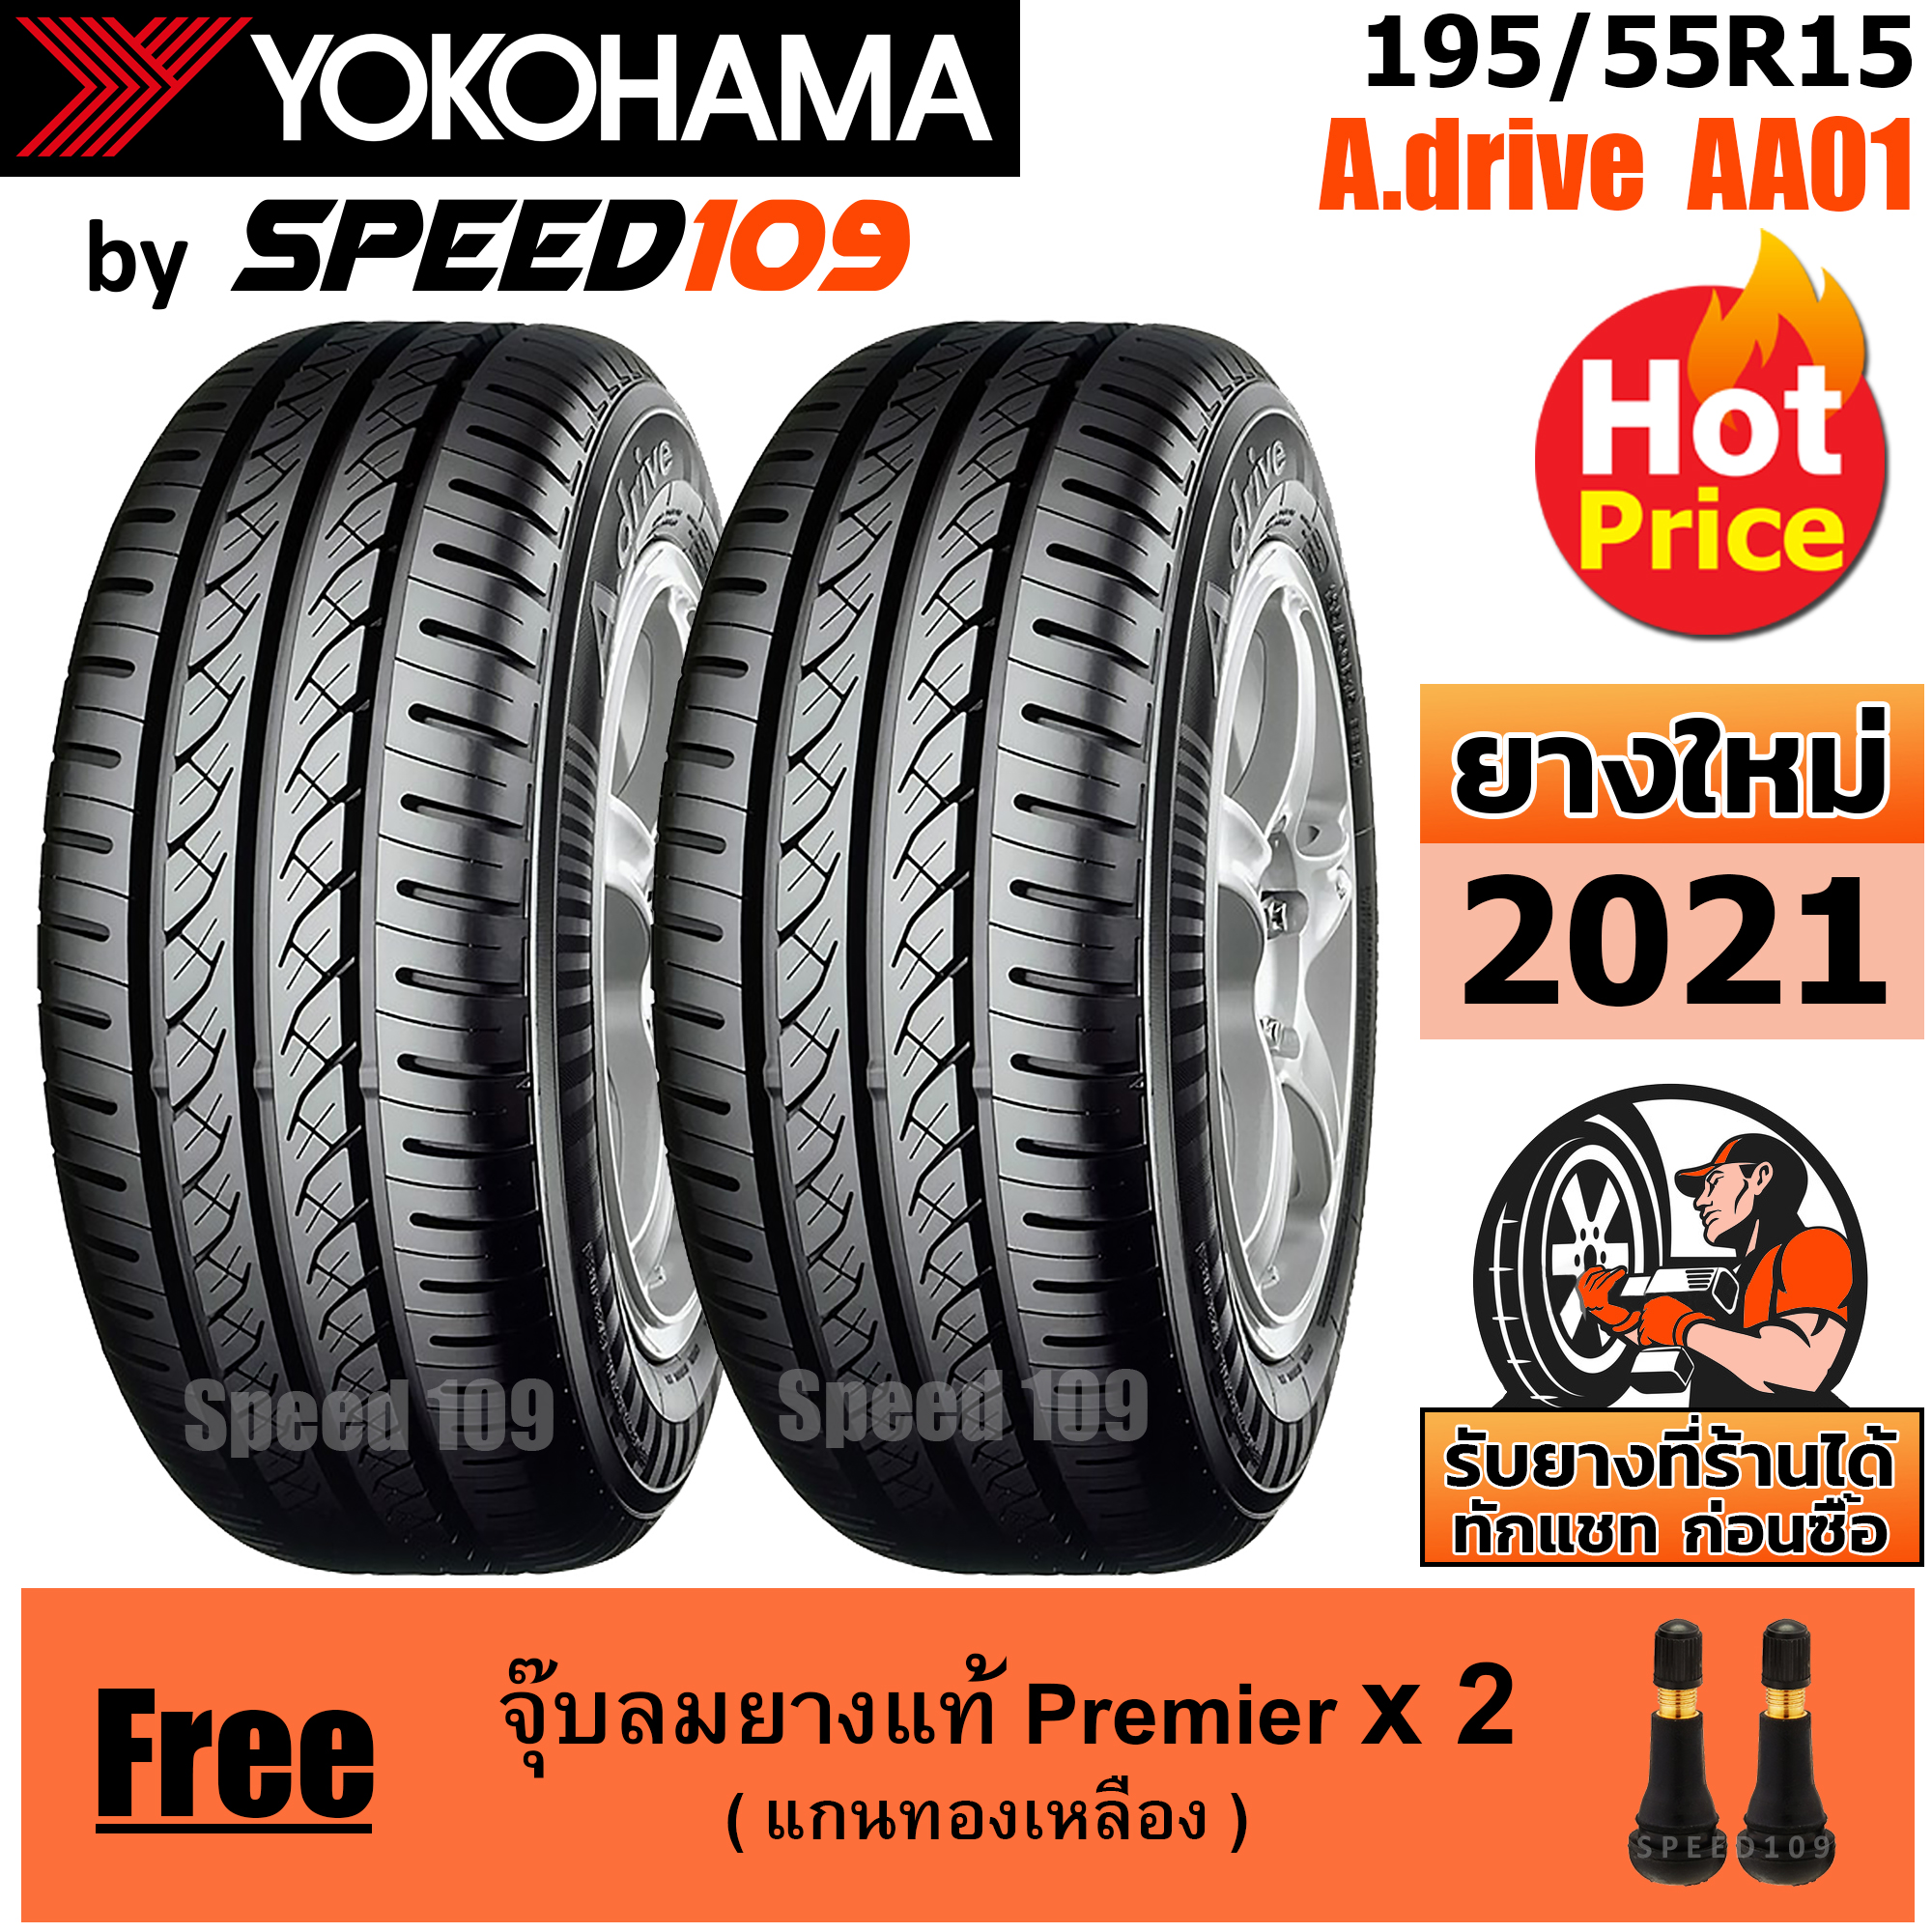 YOKOHAMA ยางรถยนต์ ขอบ 15 ขนาด 195/55R15 รุ่น A.drive AA01 - 2 เส้น (ปี 2021)